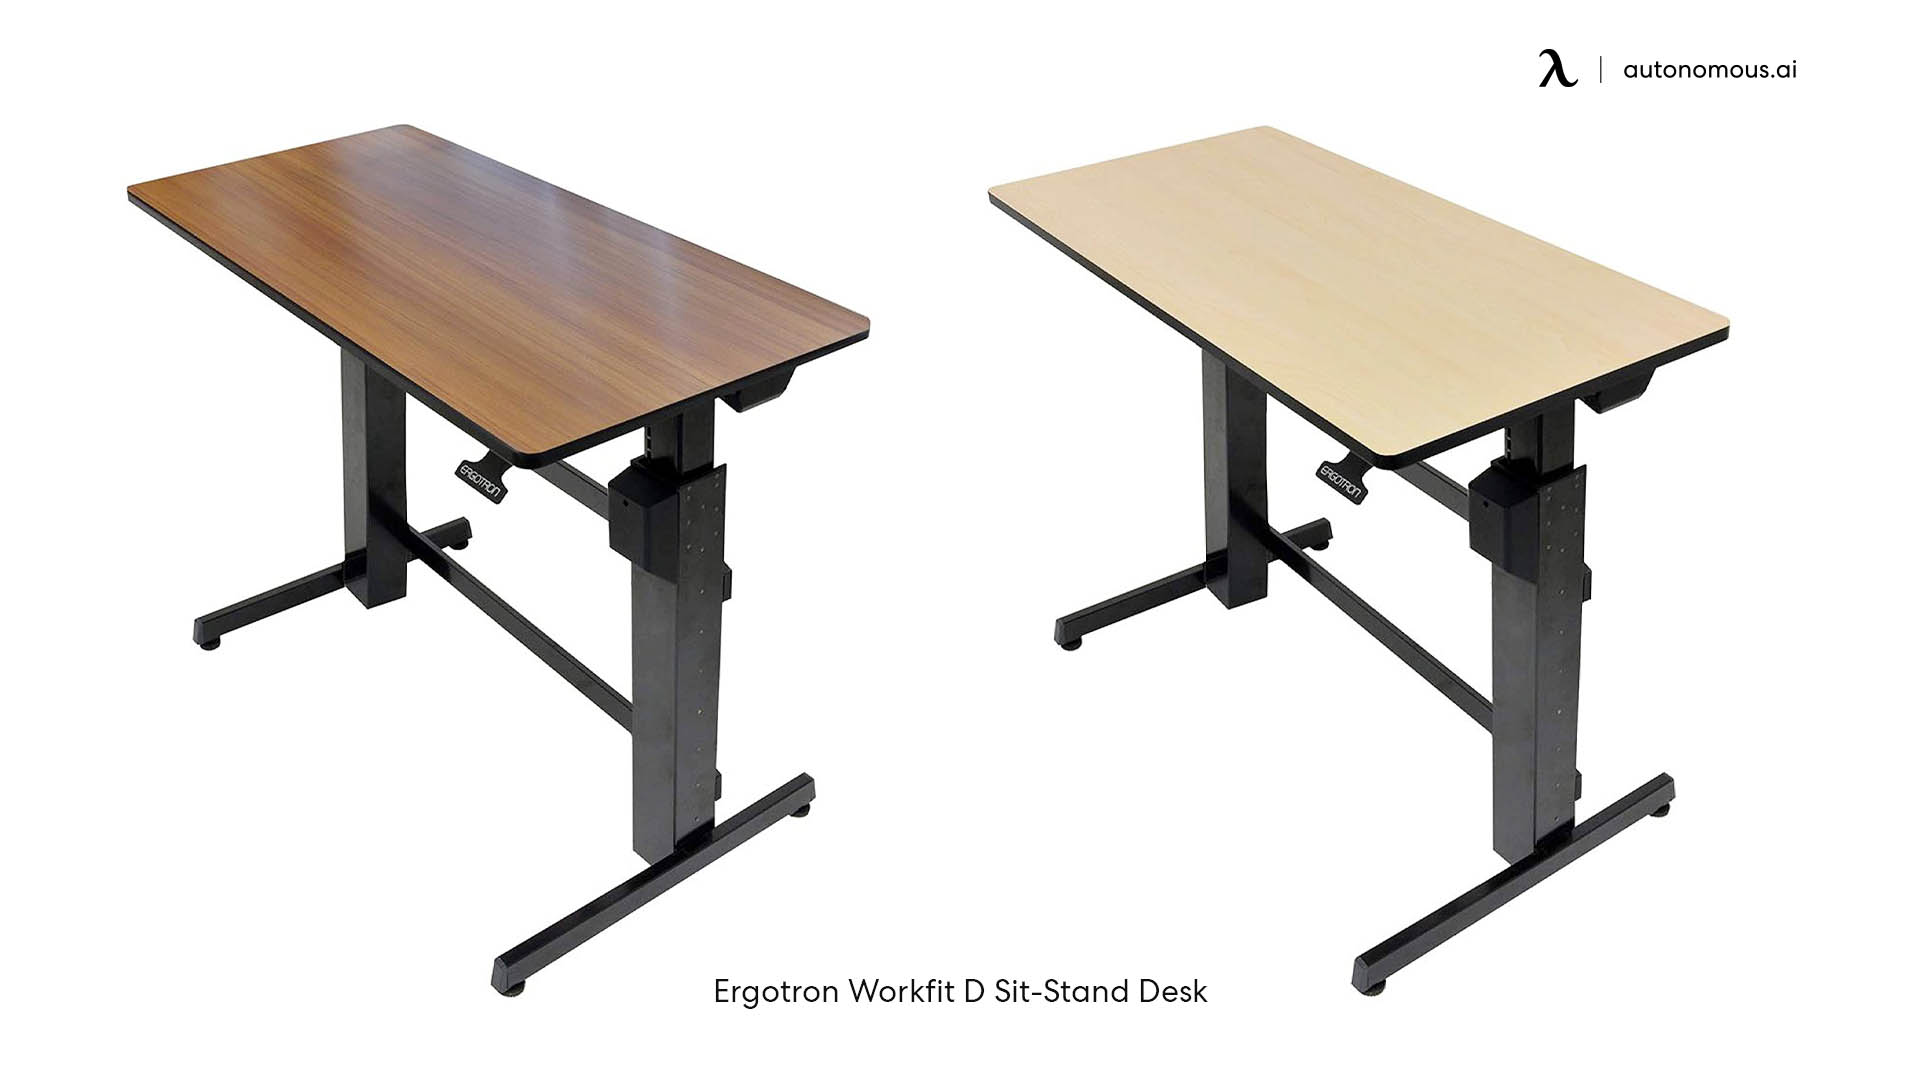 Ergotron Workfit D Sit-Stand Desk